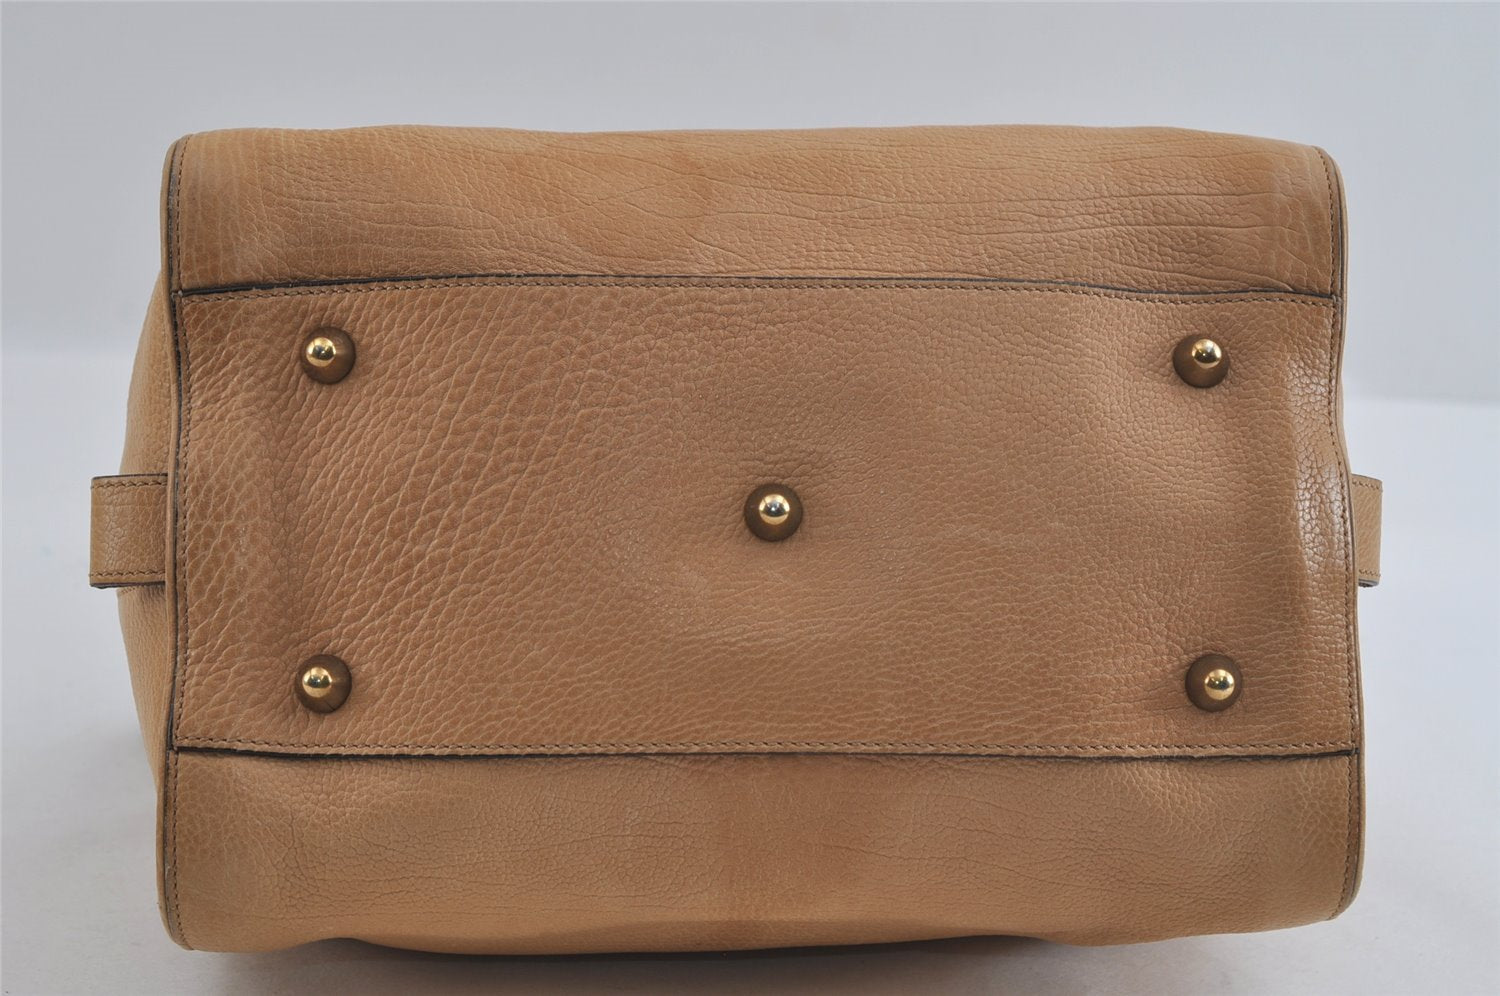 Authentic Chloe Mini Paddington Leather 2Way Shoulder Hand Bag Purse Beige 2462I